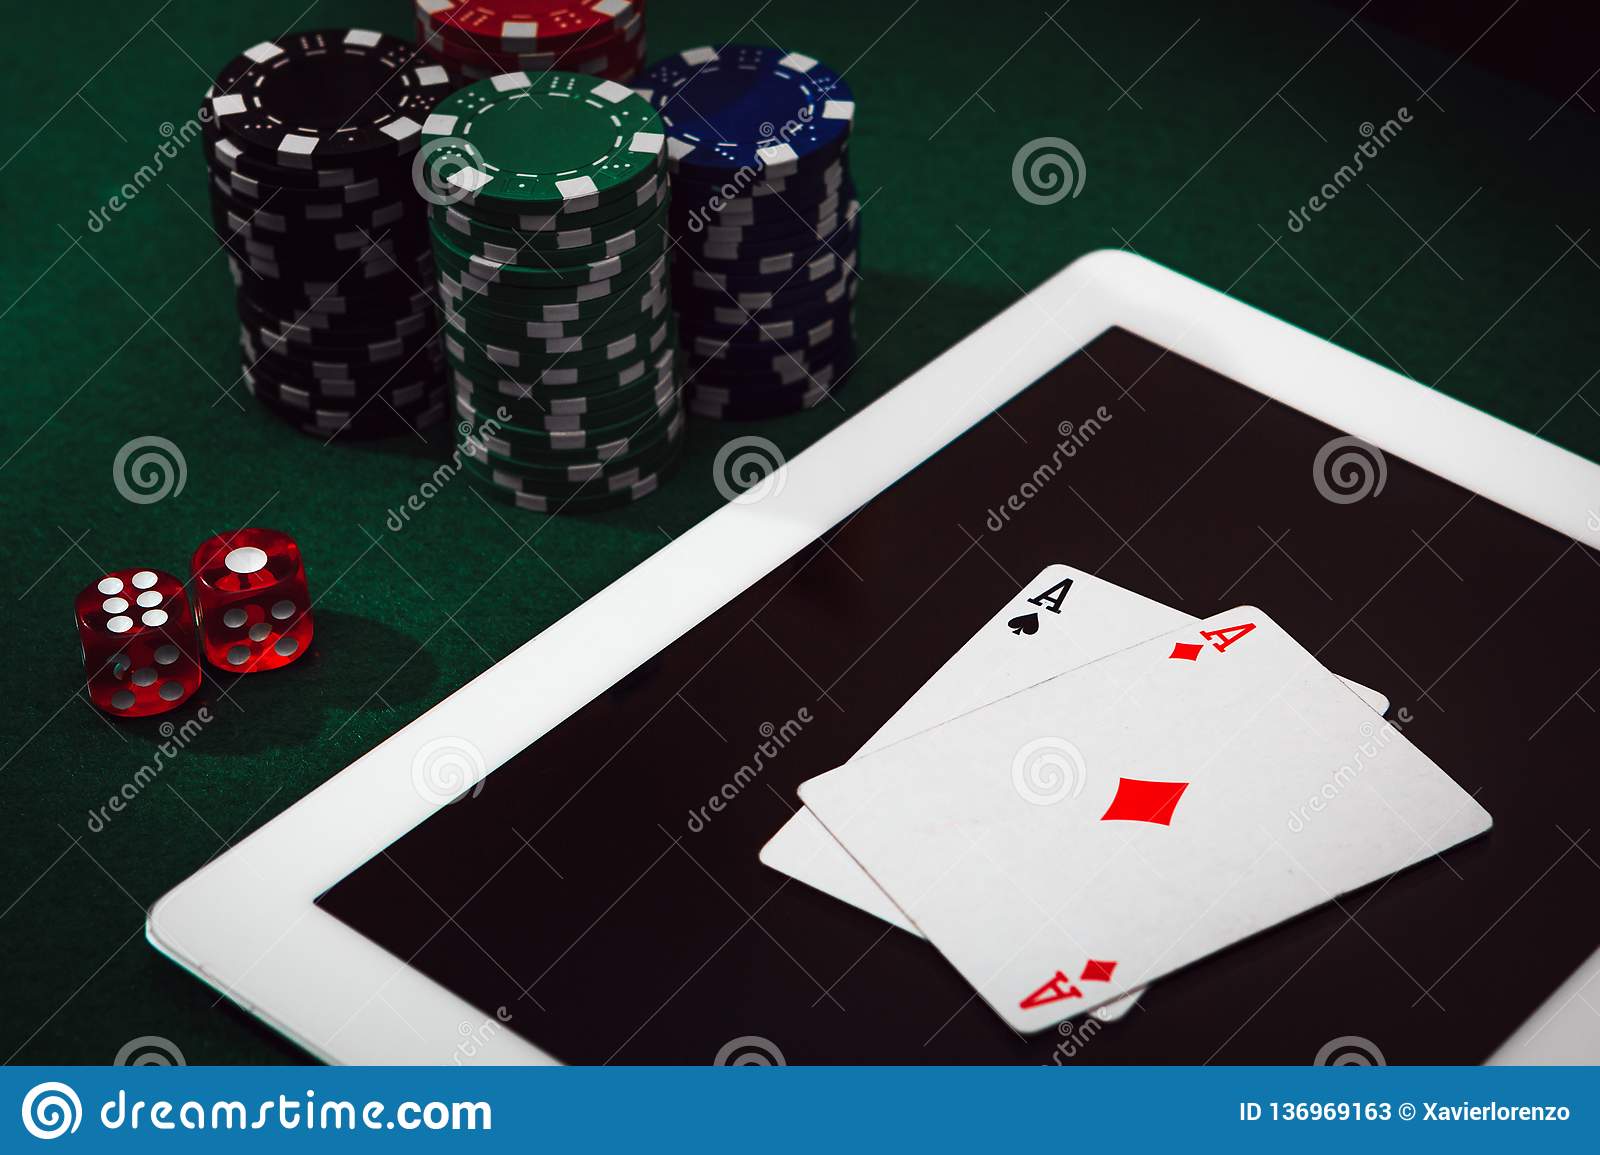 How To Win Money At Casino Poker